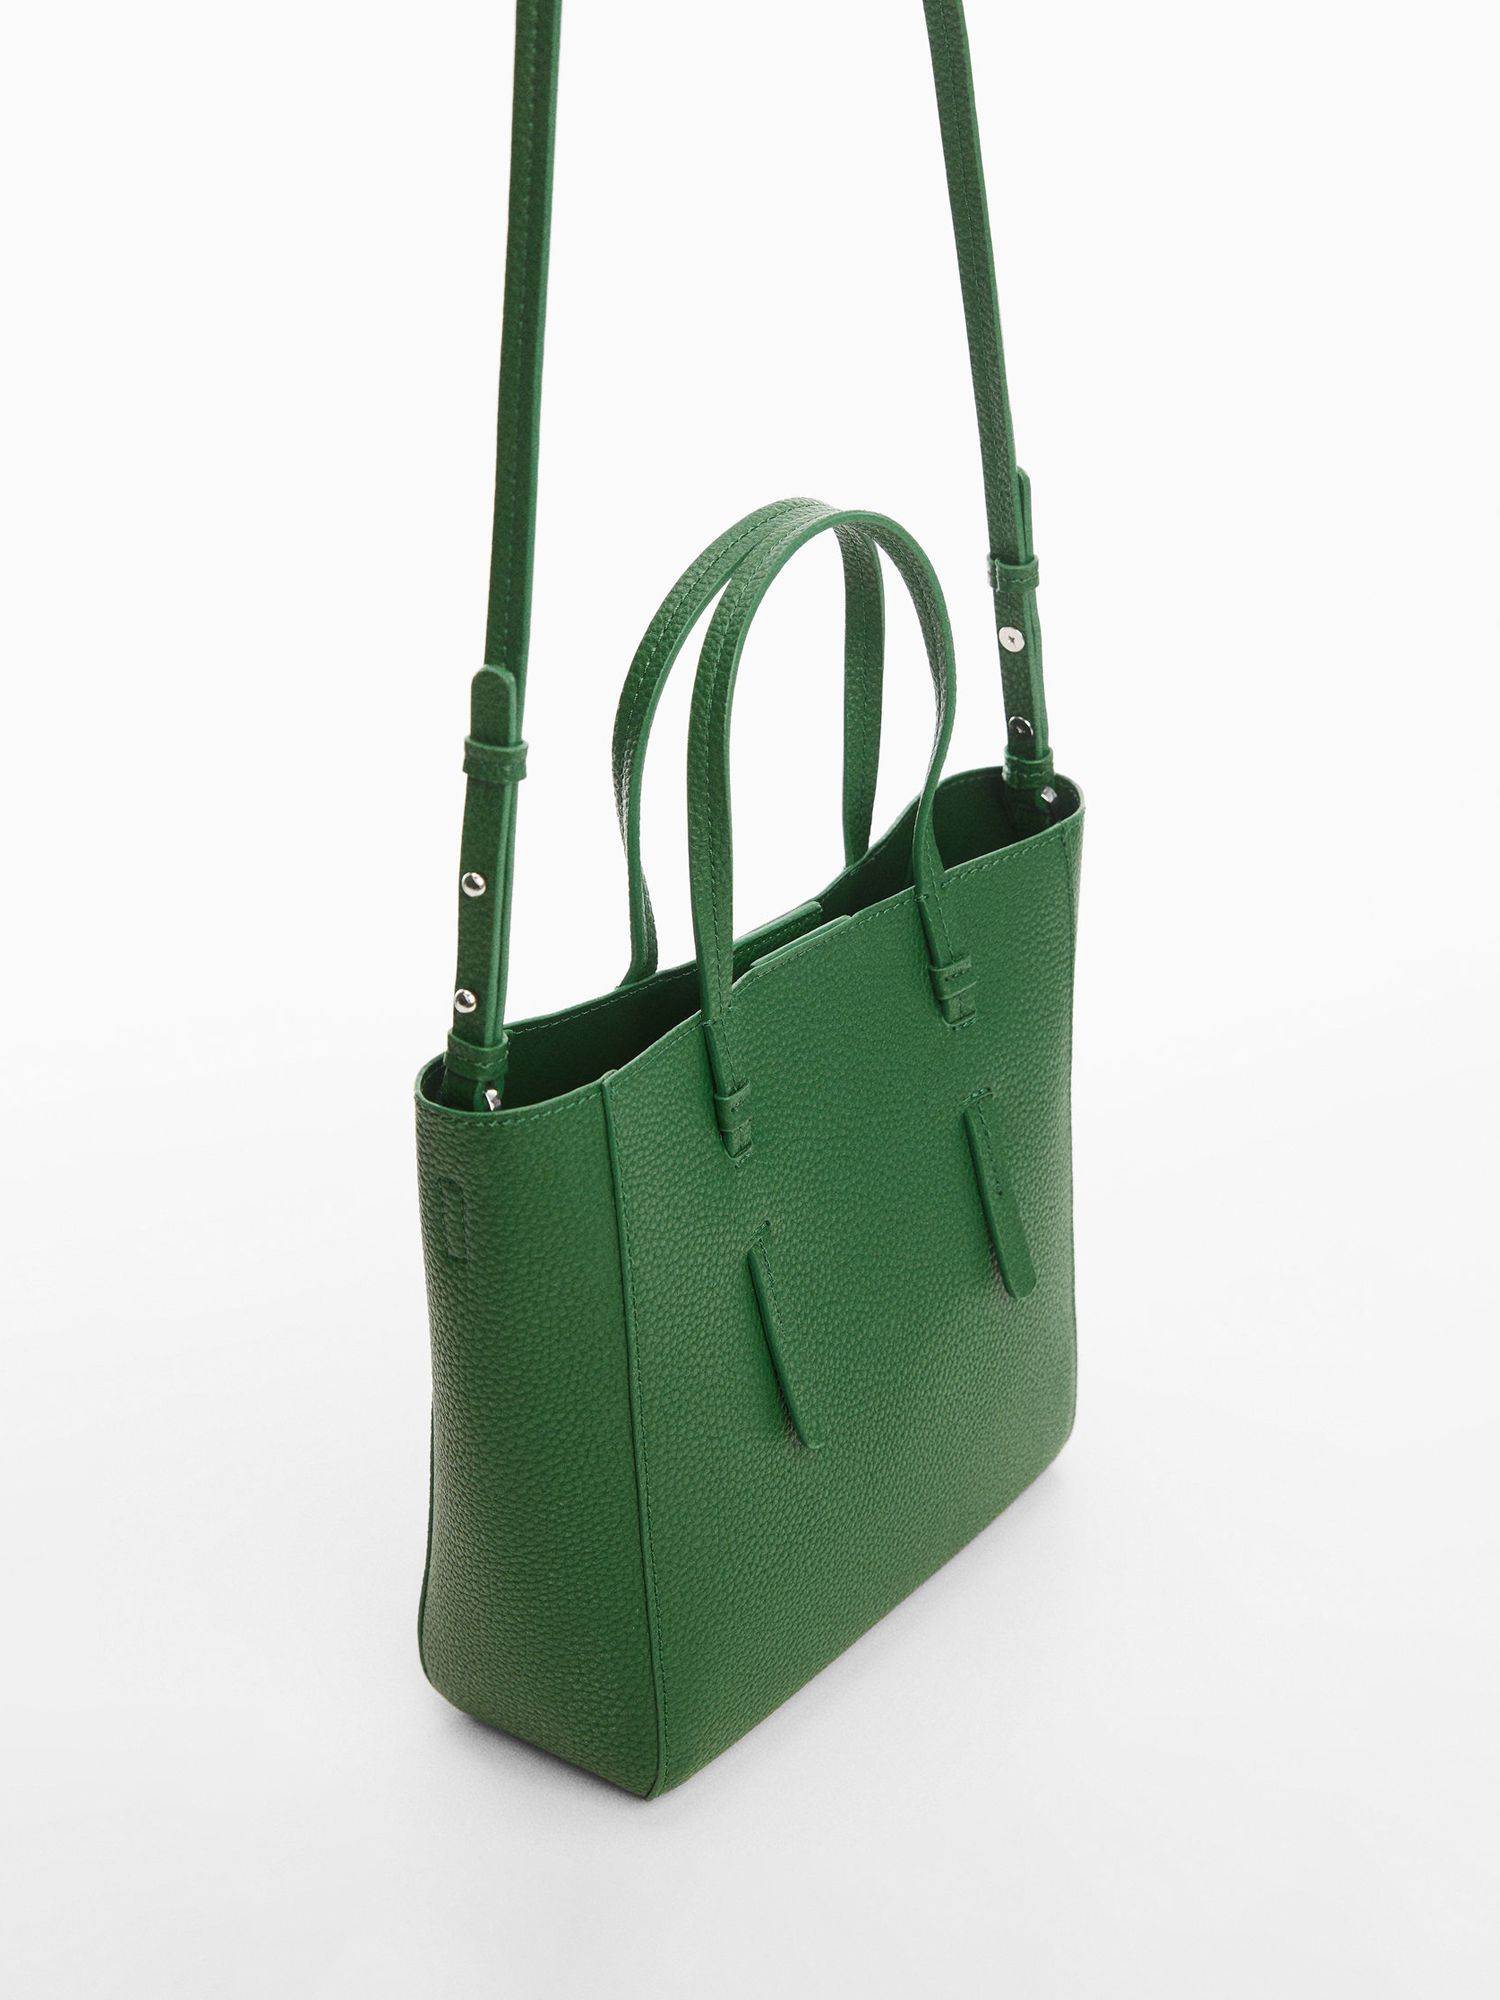 Mango Peonia Tote Bag, Bright Green, One Size